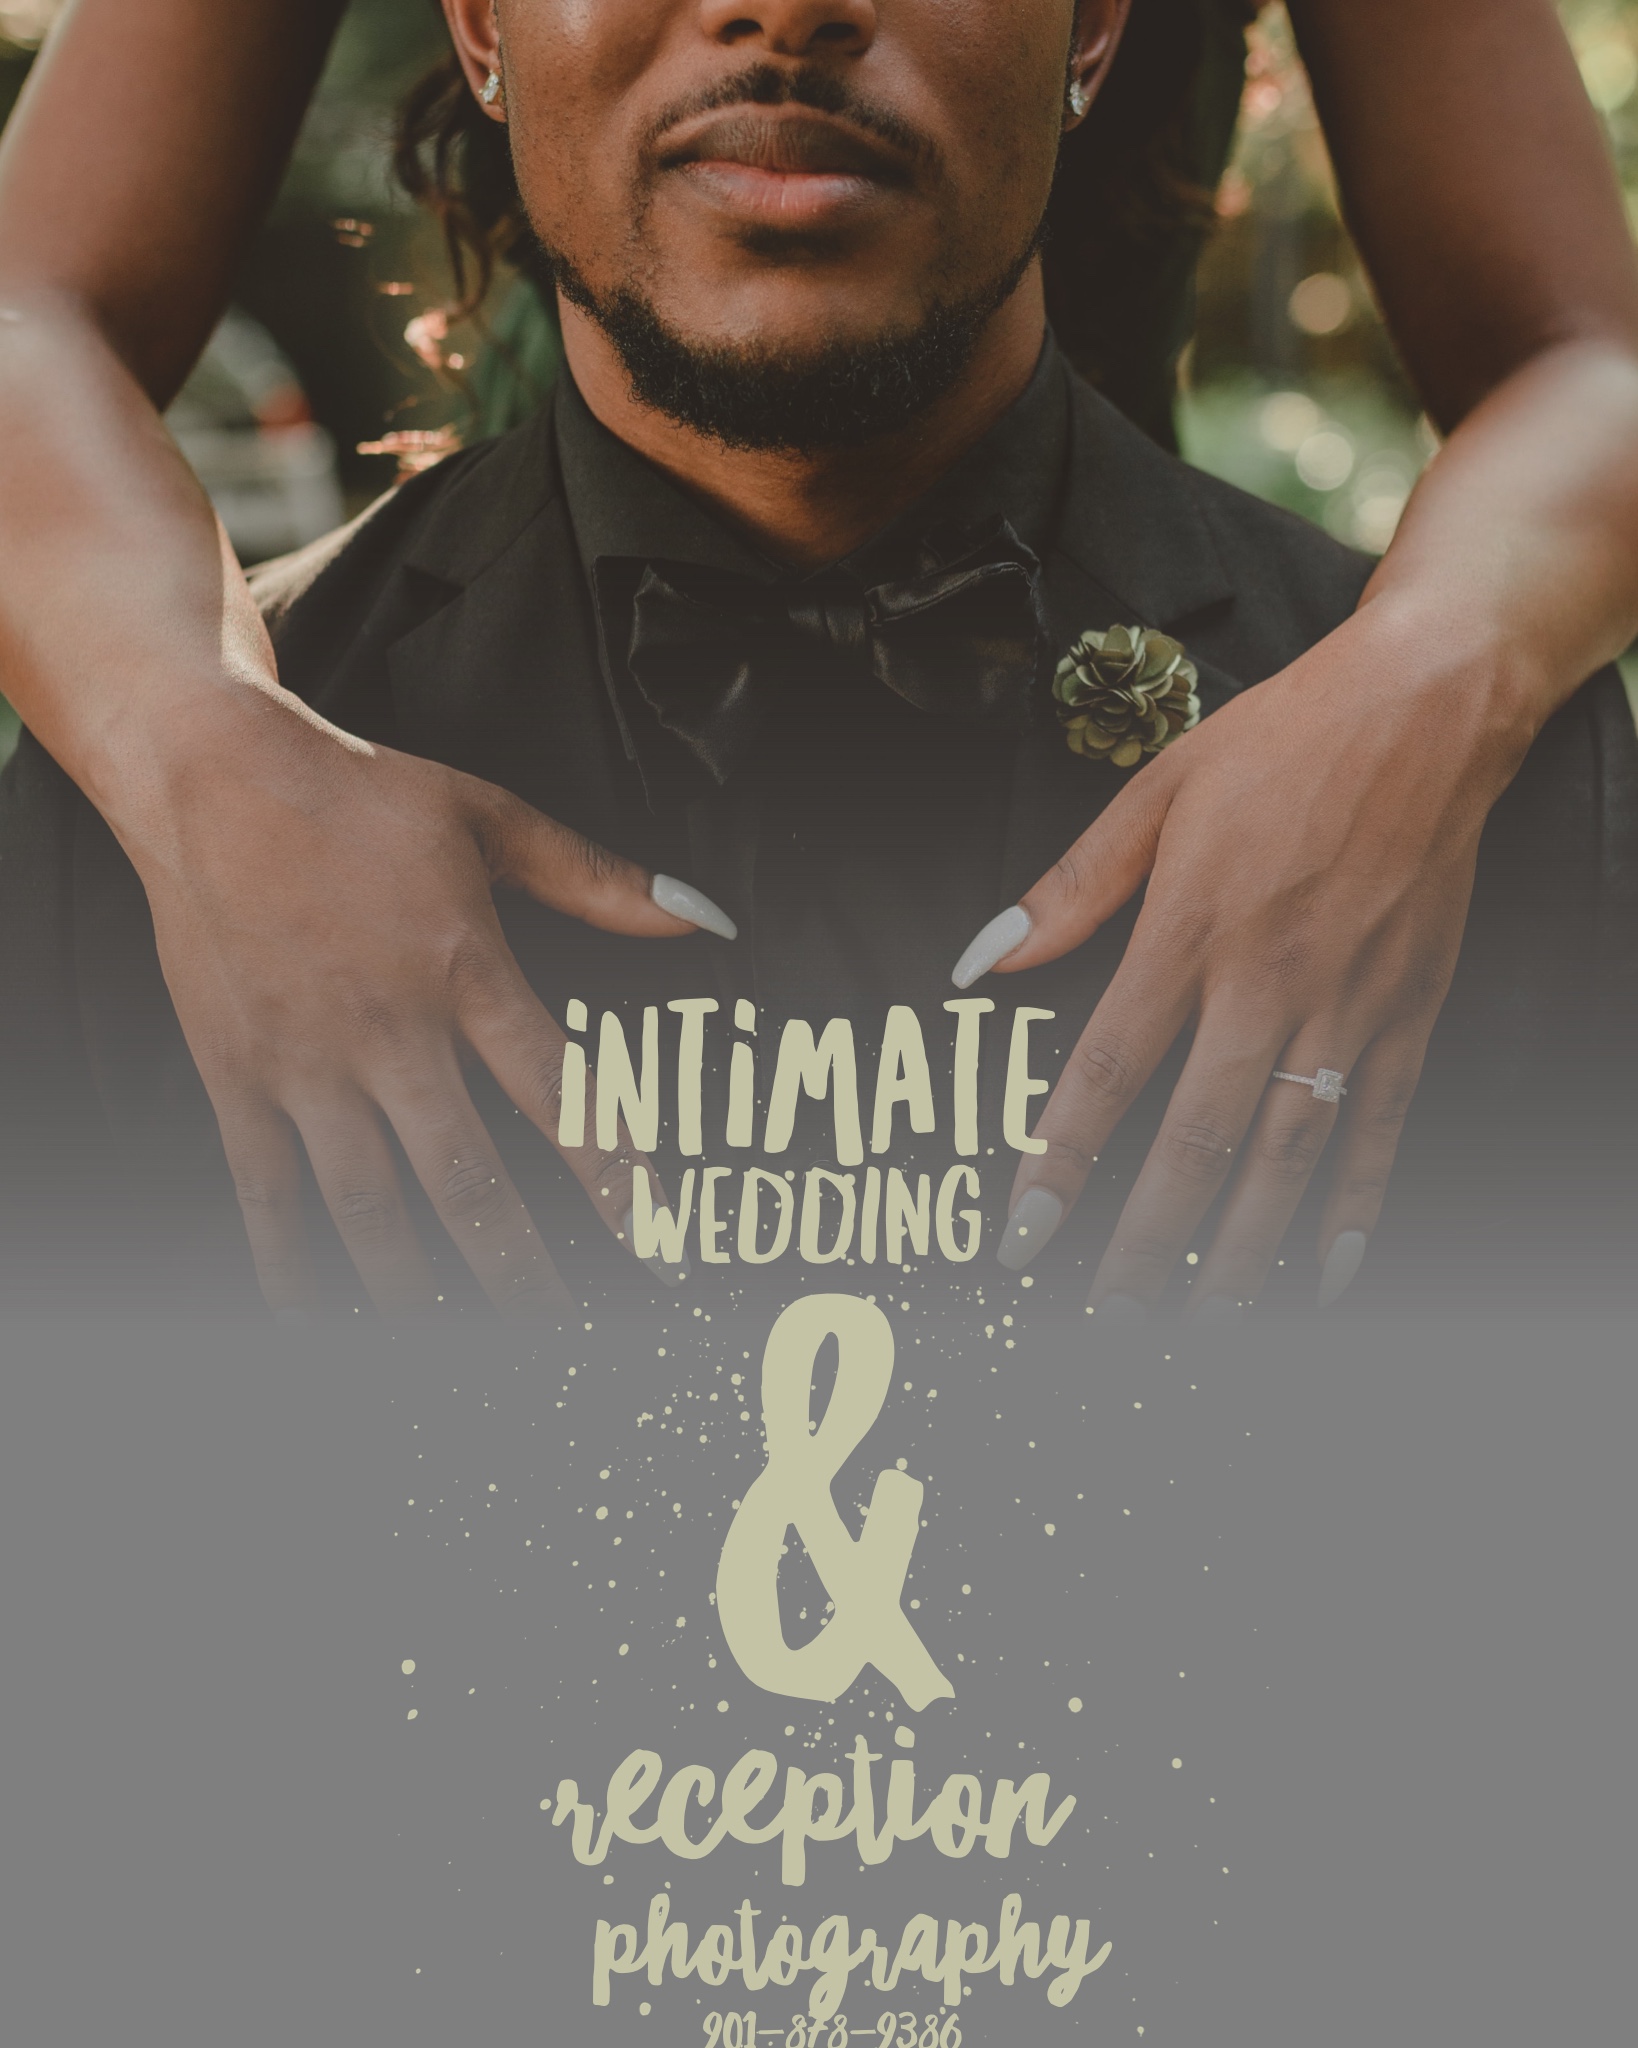 INTIMATE WEDDING & RECEPTION VENUE | PHOTOGRAPHY 901-878-9386